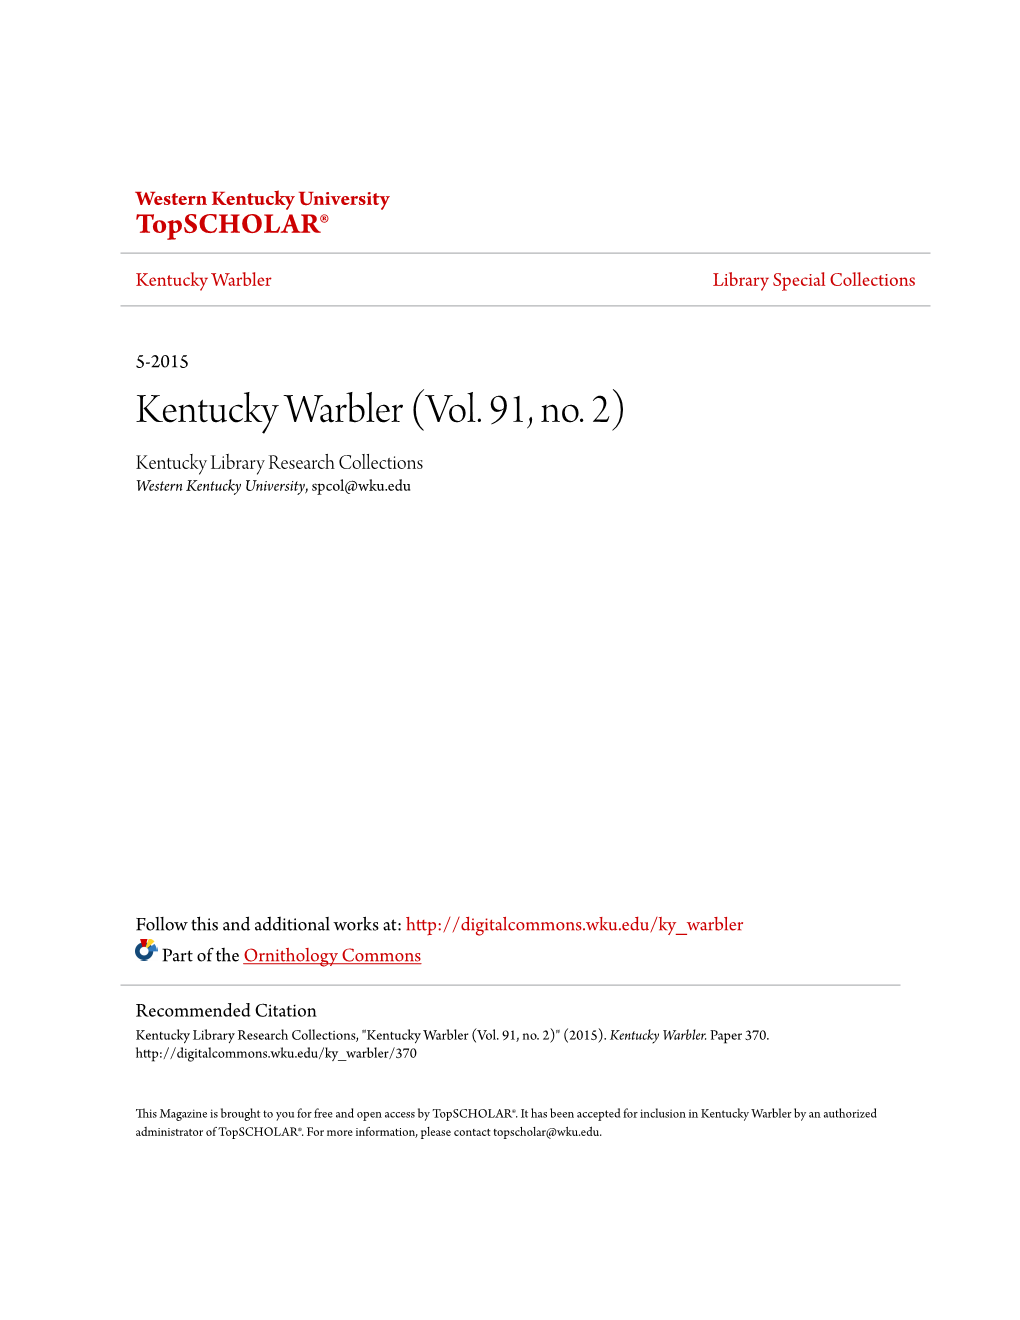 Kentucky Warbler (Vol. 91, No. 2) Kentucky Library Research Collections Western Kentucky University, Spcol@Wku.Edu